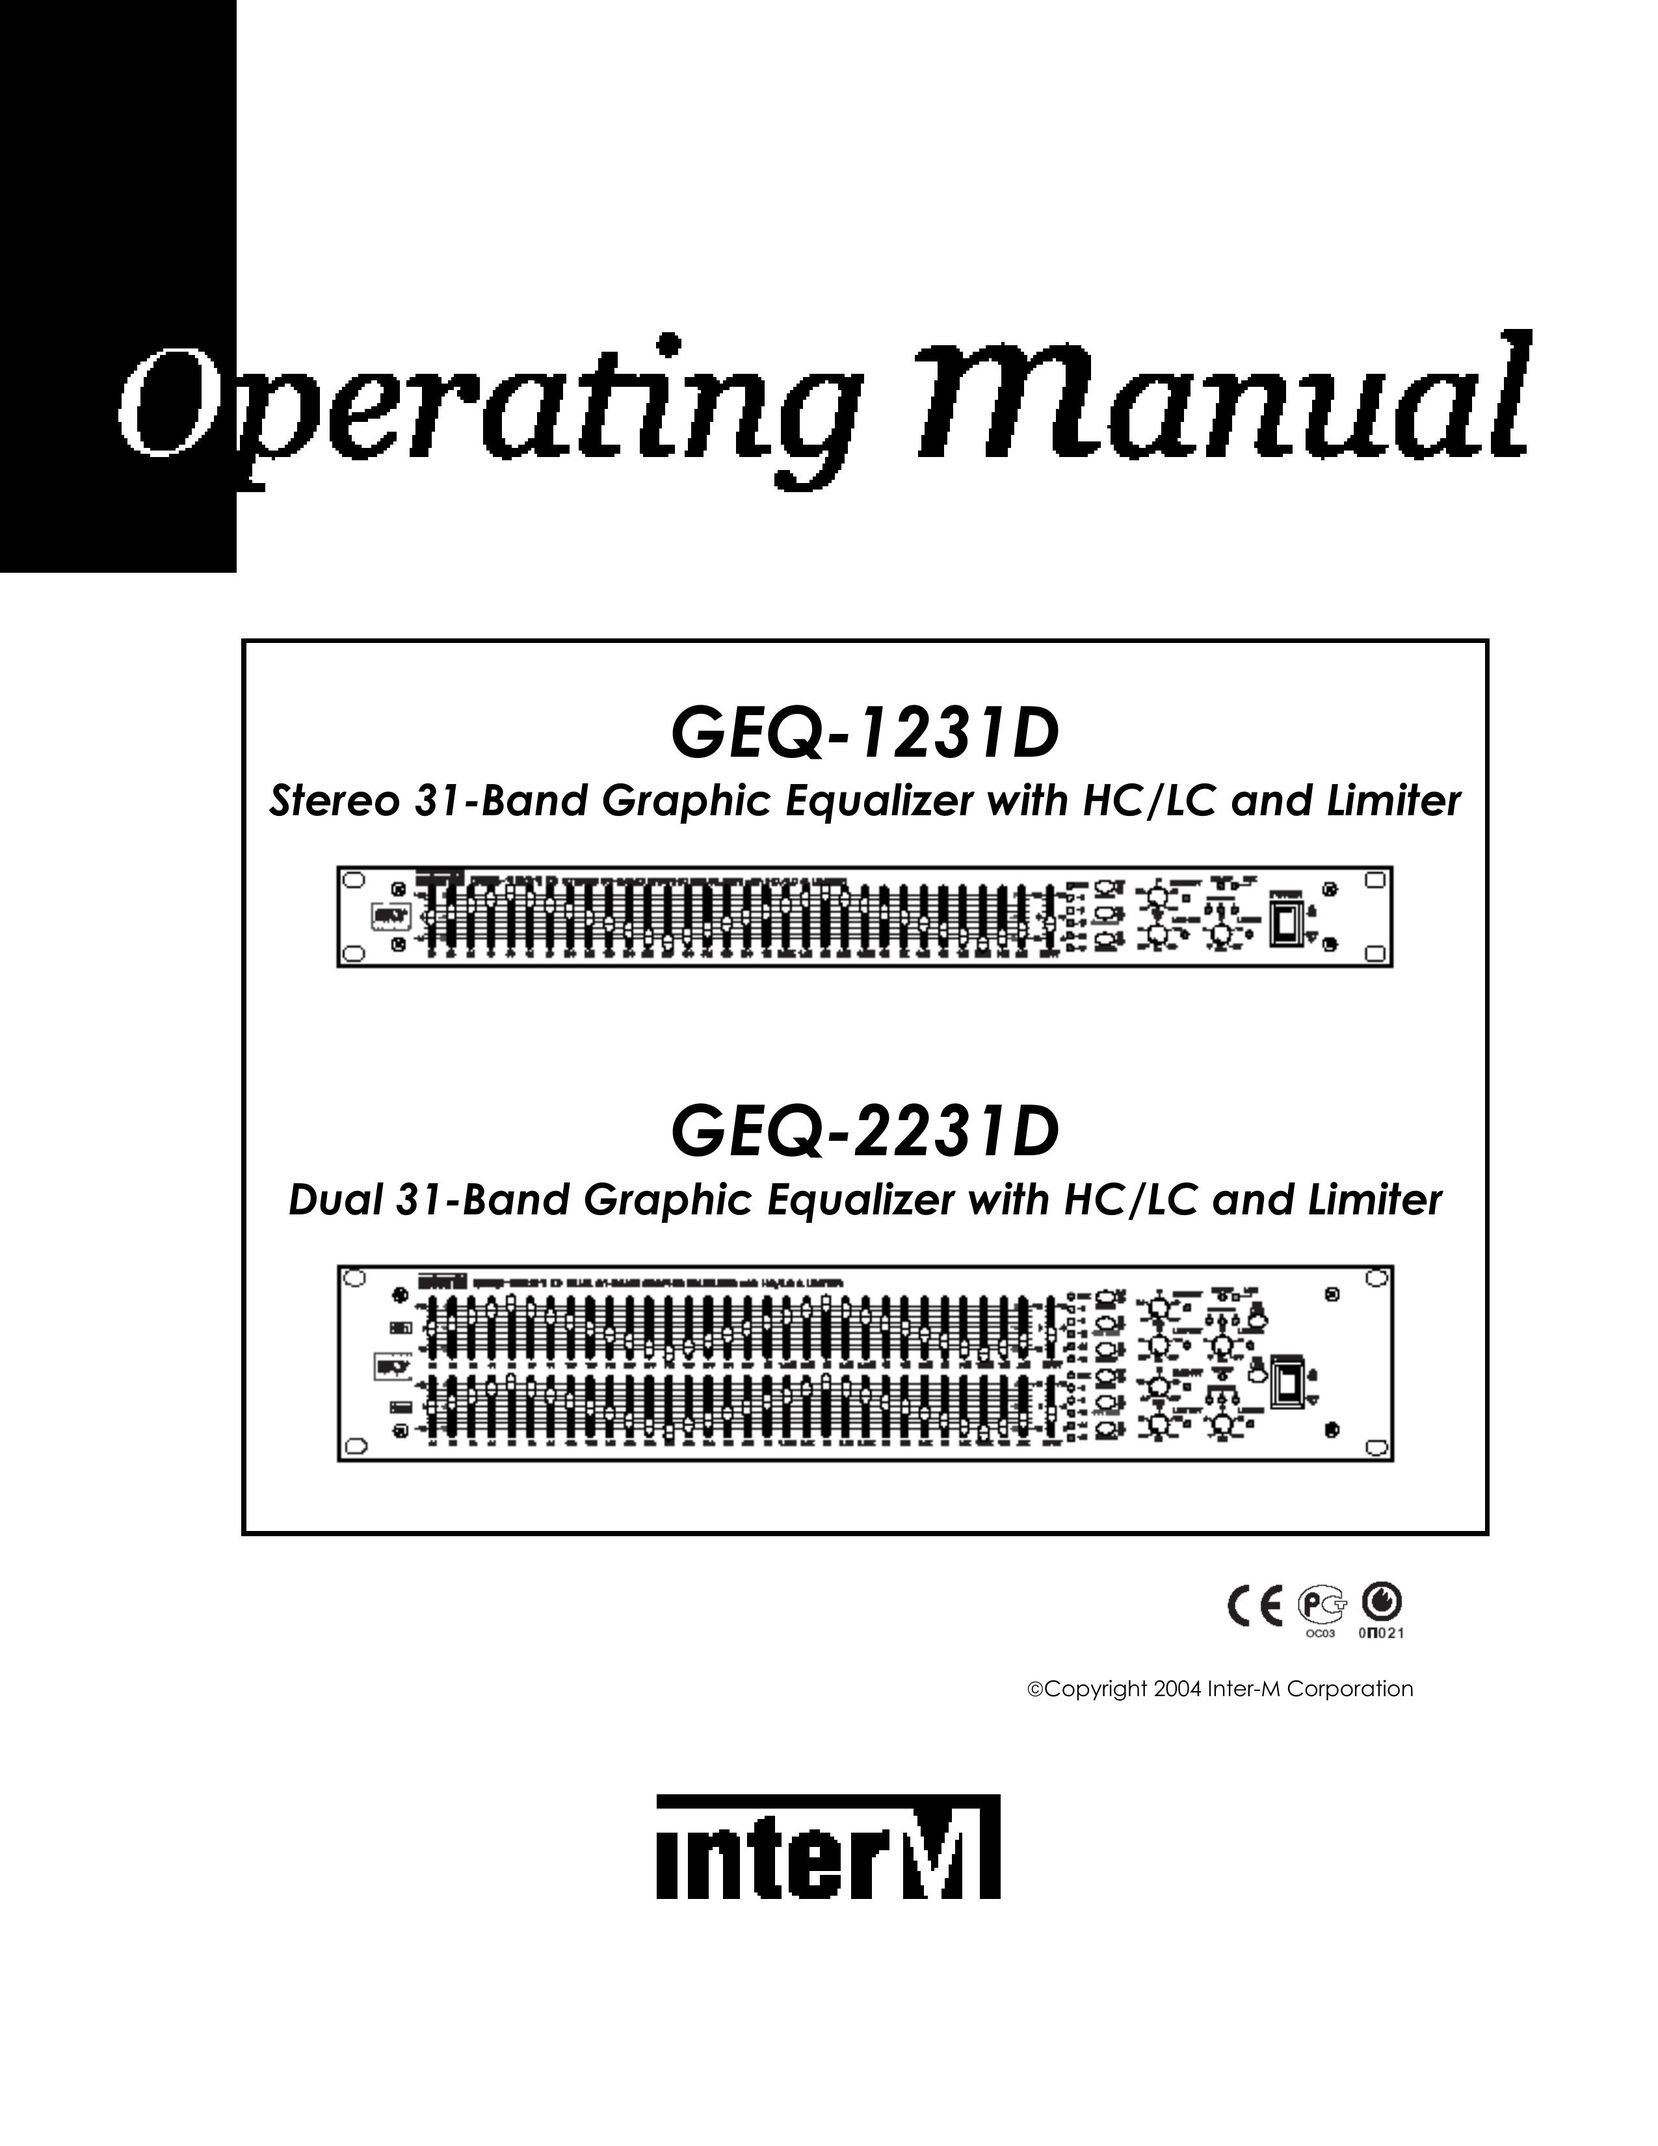 Intermec GEQ-2231D Stereo Equalizer User Manual